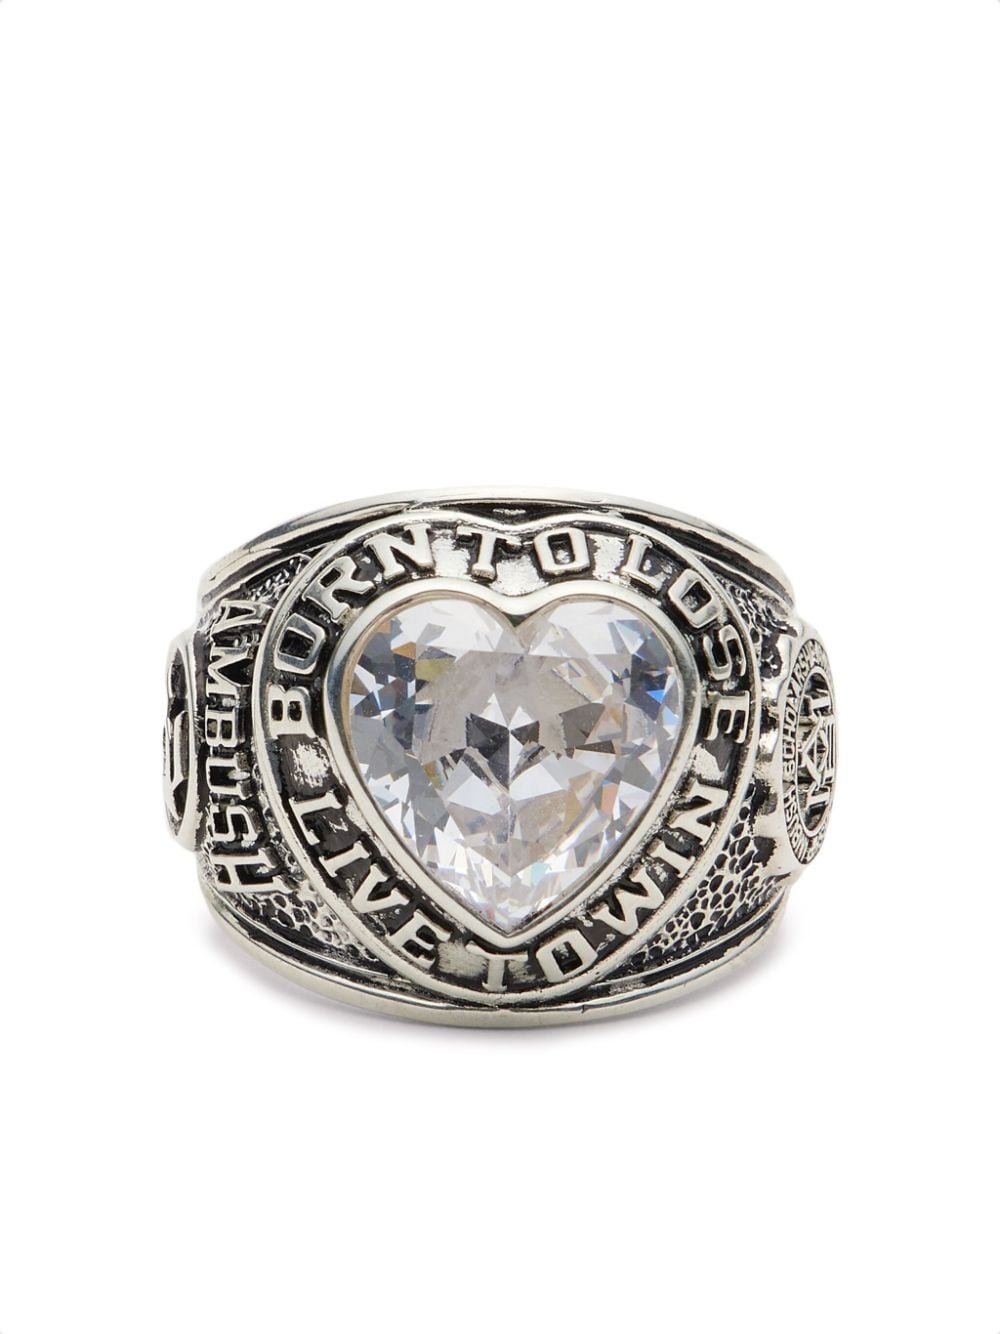 Heart engraved signet ring - 1